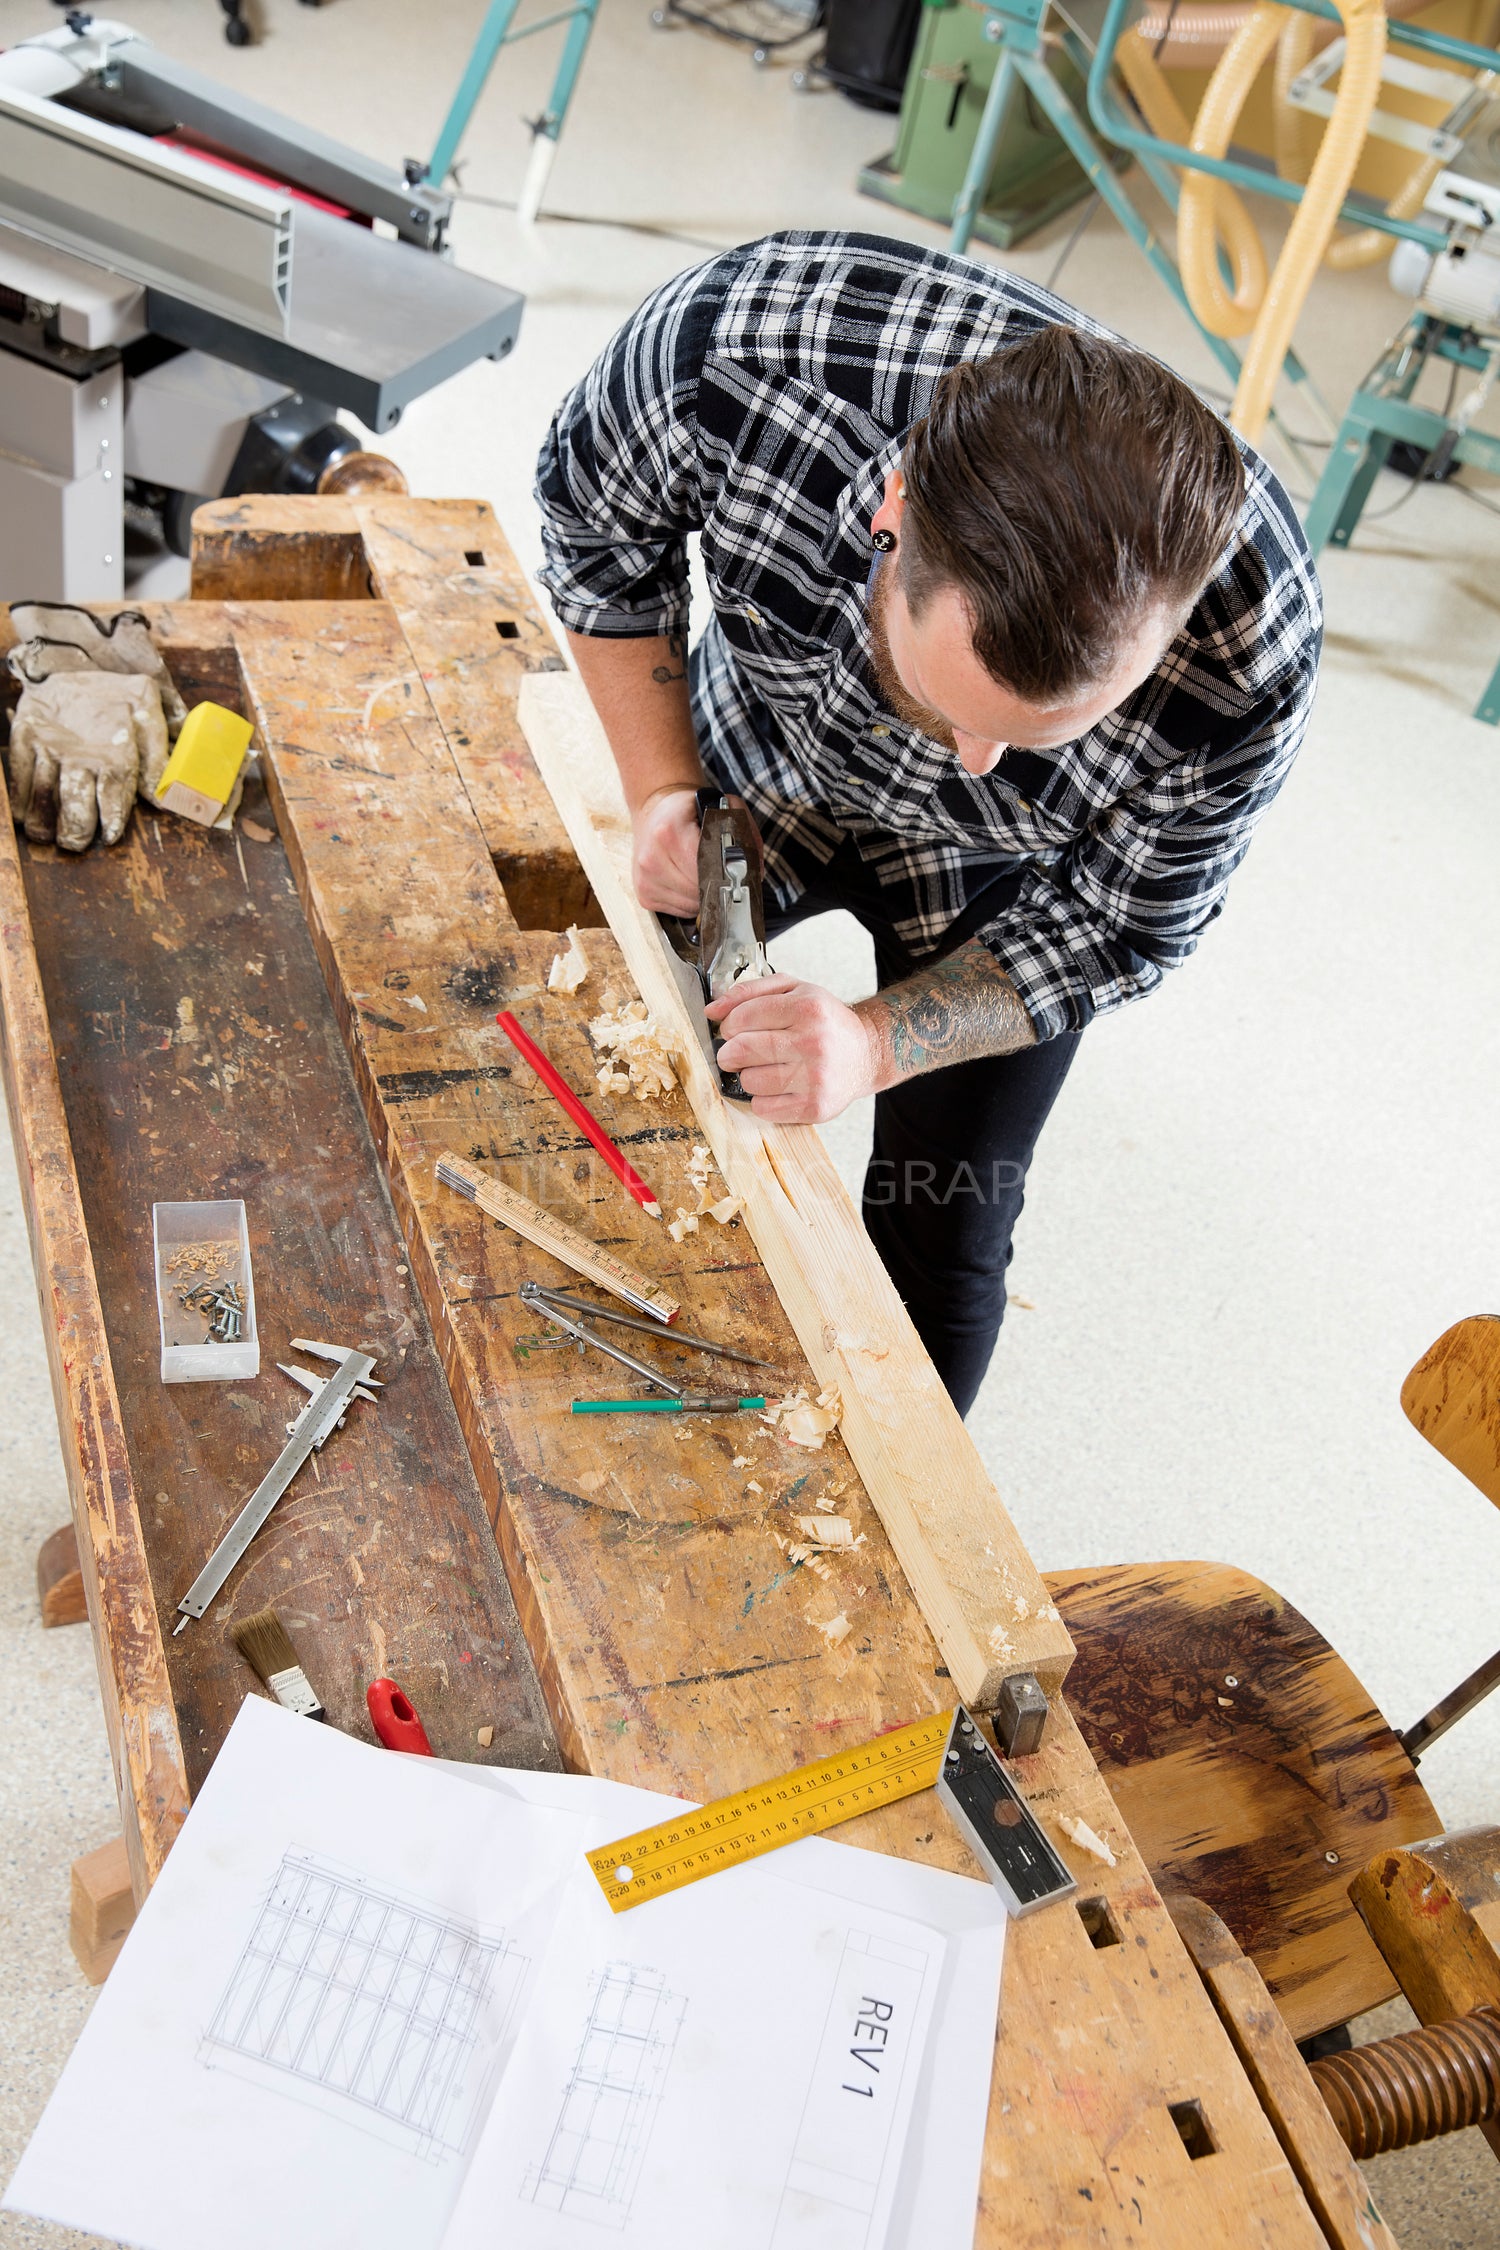 Craftsman work with plane on wood plank in workshop